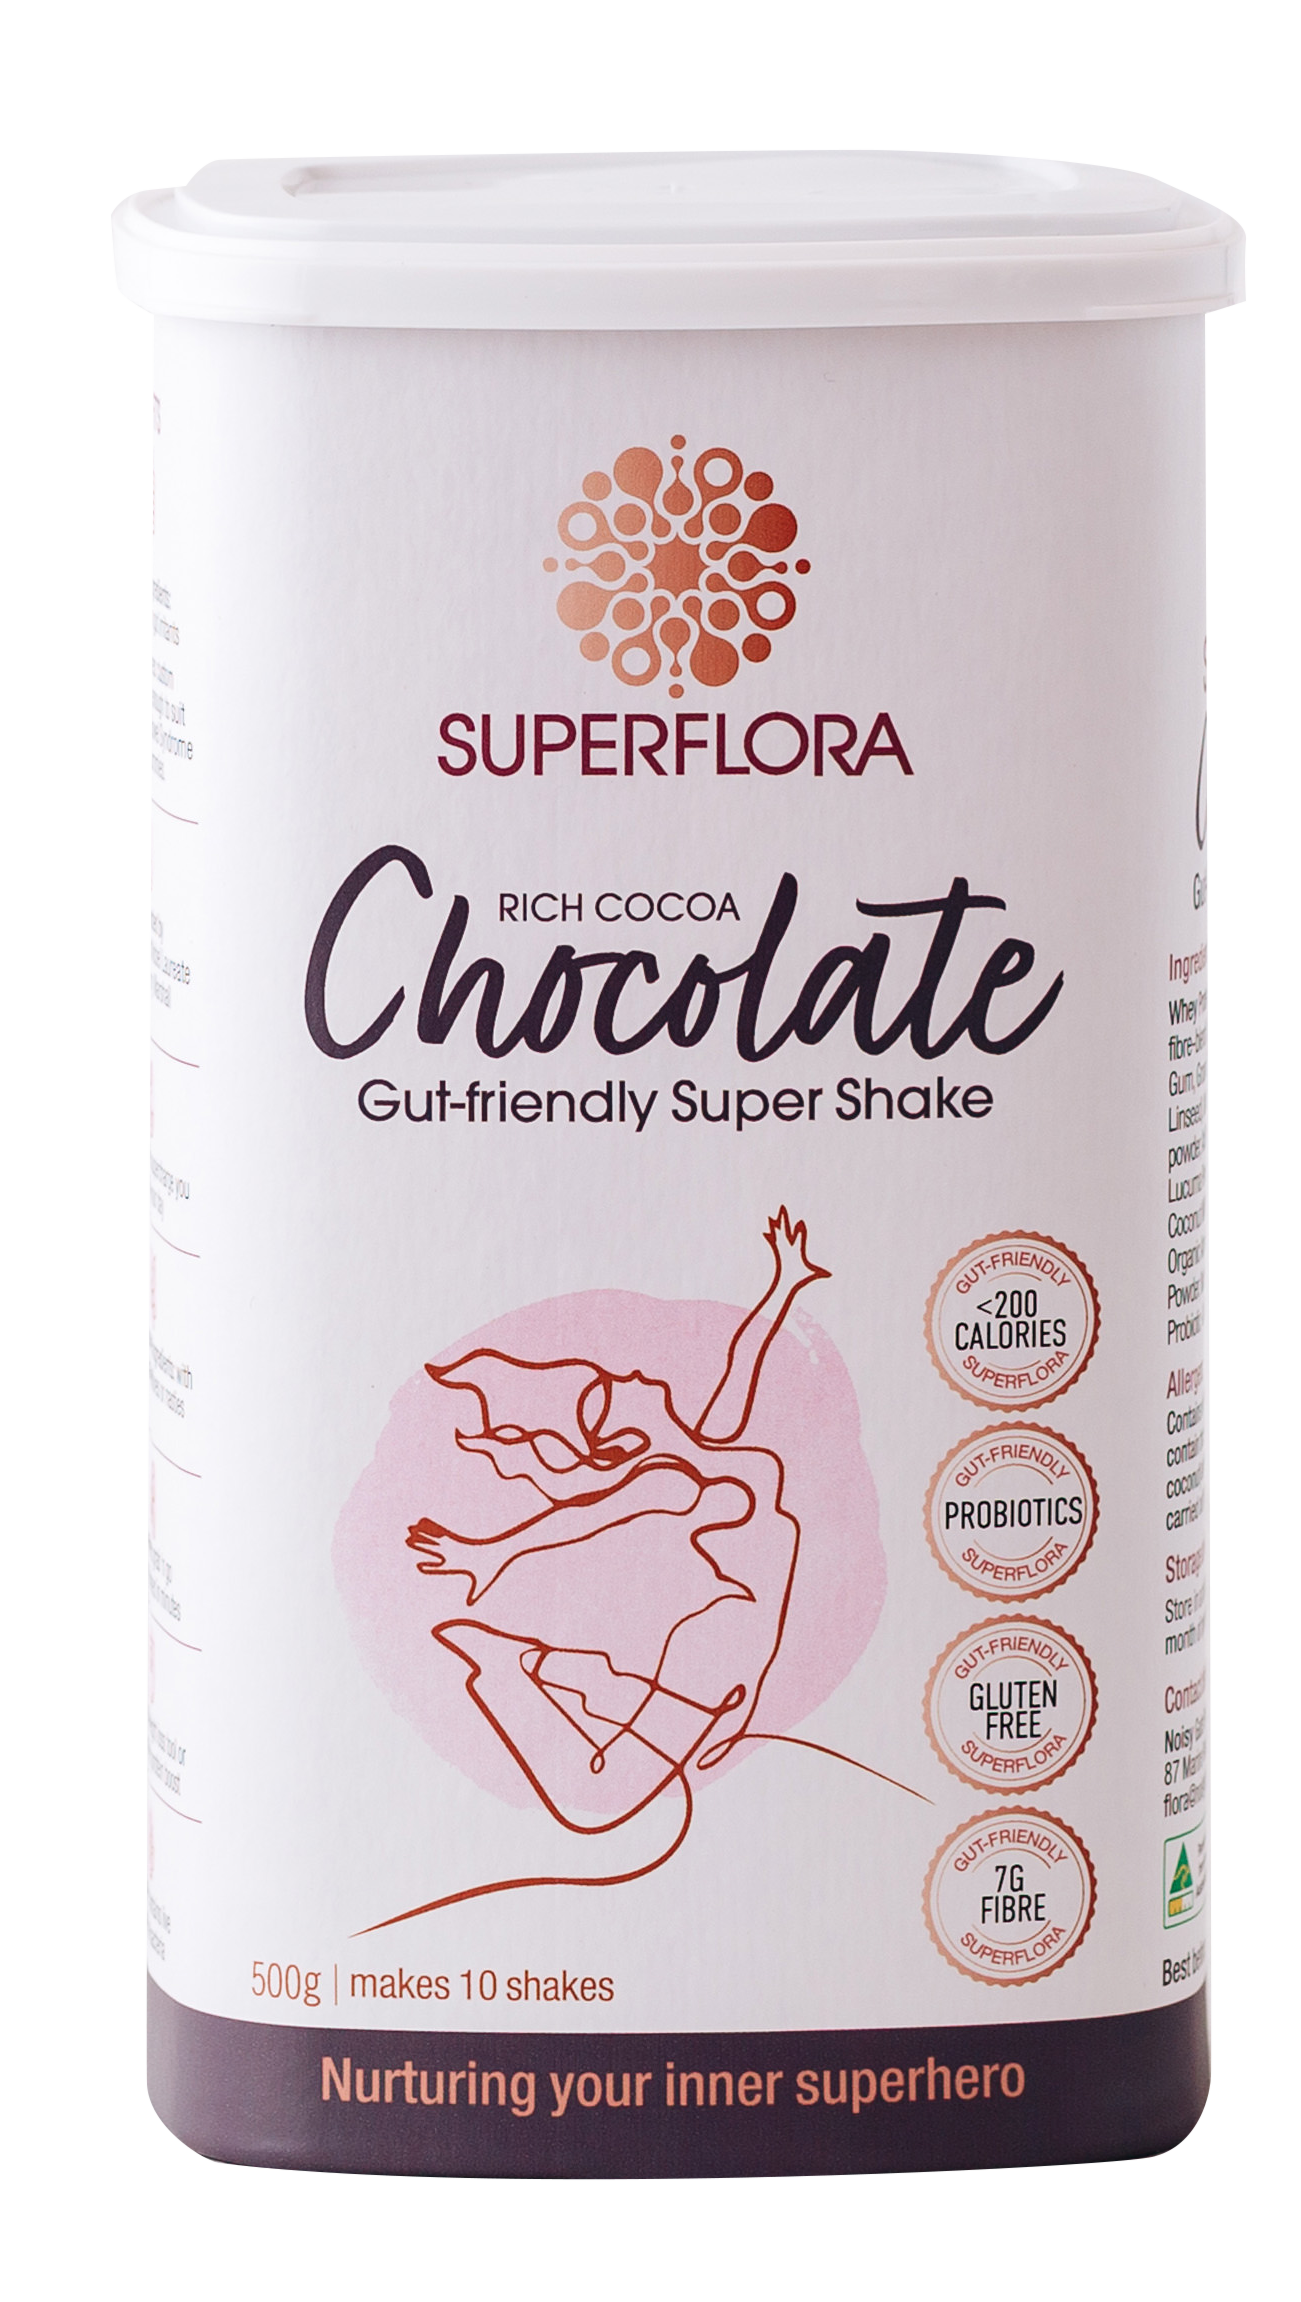 Rich Cocoa Chocolate gut-friendly shake